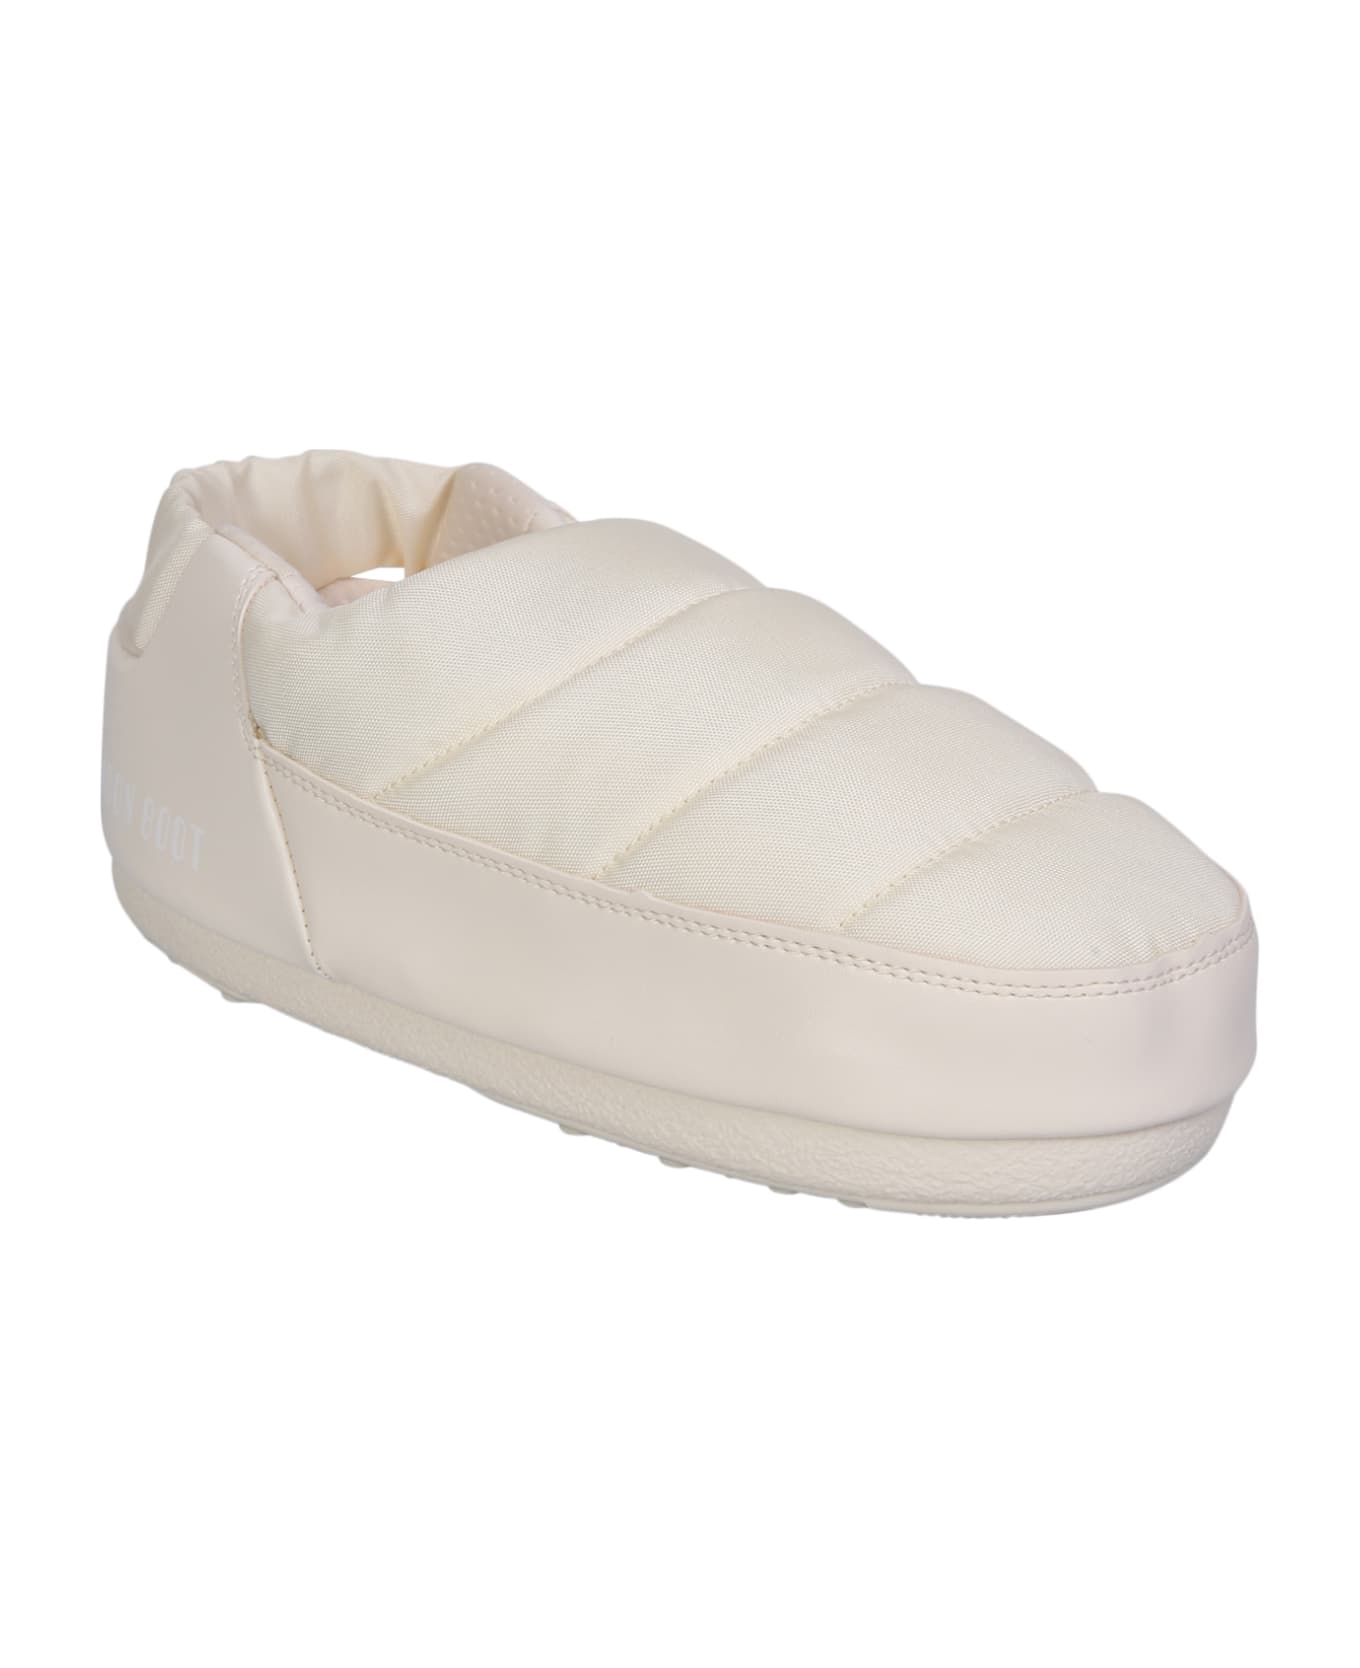 Moon Boot Cream Evolution Sandals - White スニーカー